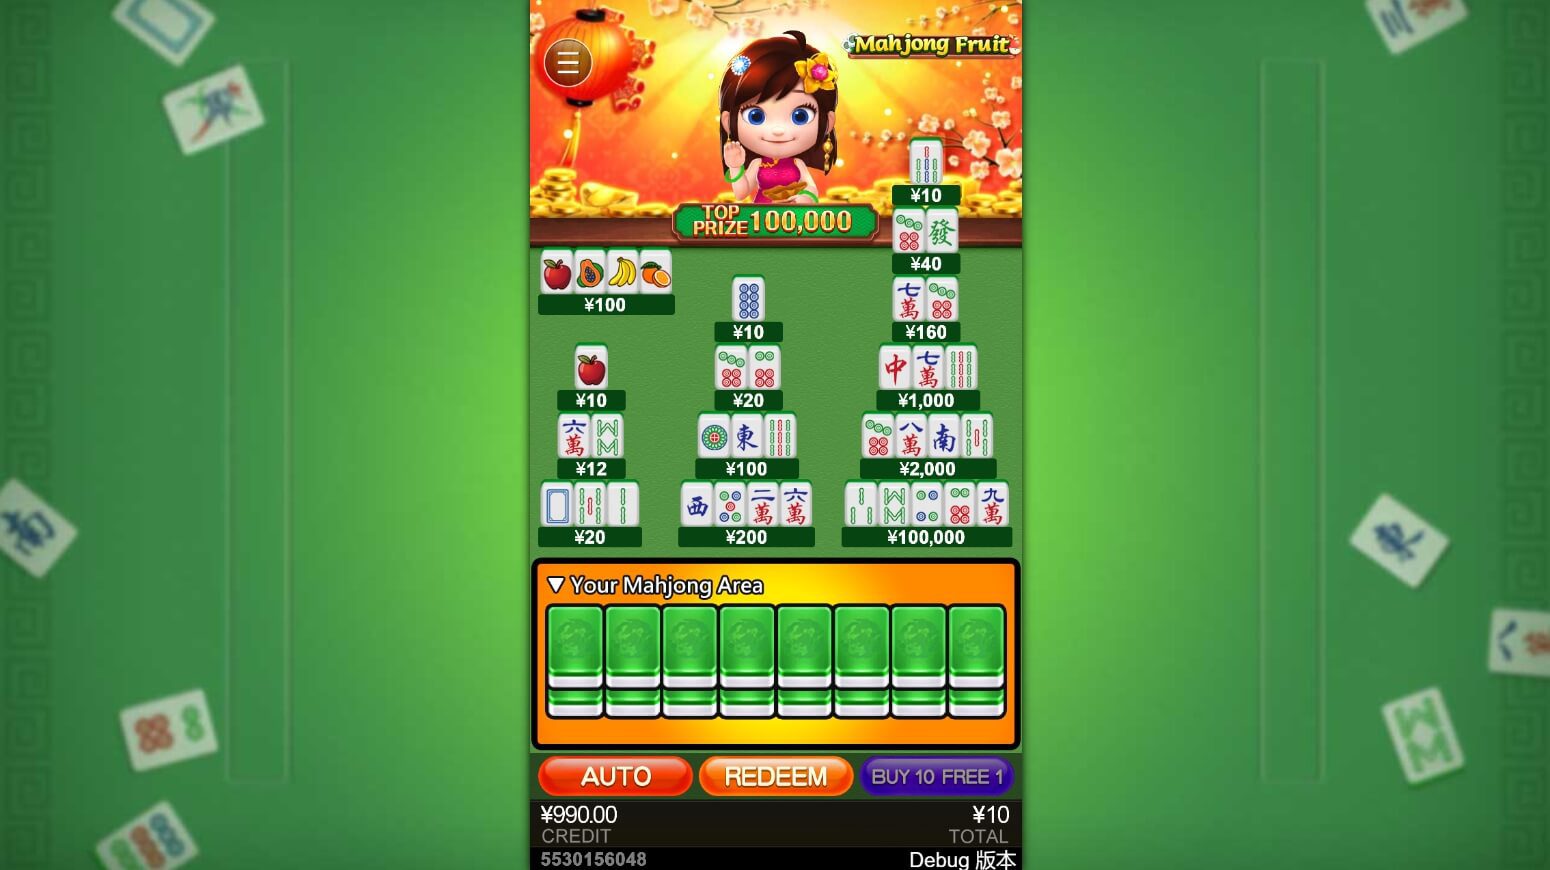 Mahjong Fruit ค่าย cq9 เว็บตรง superslot เครดิตฟรี 50 ล่าสุด